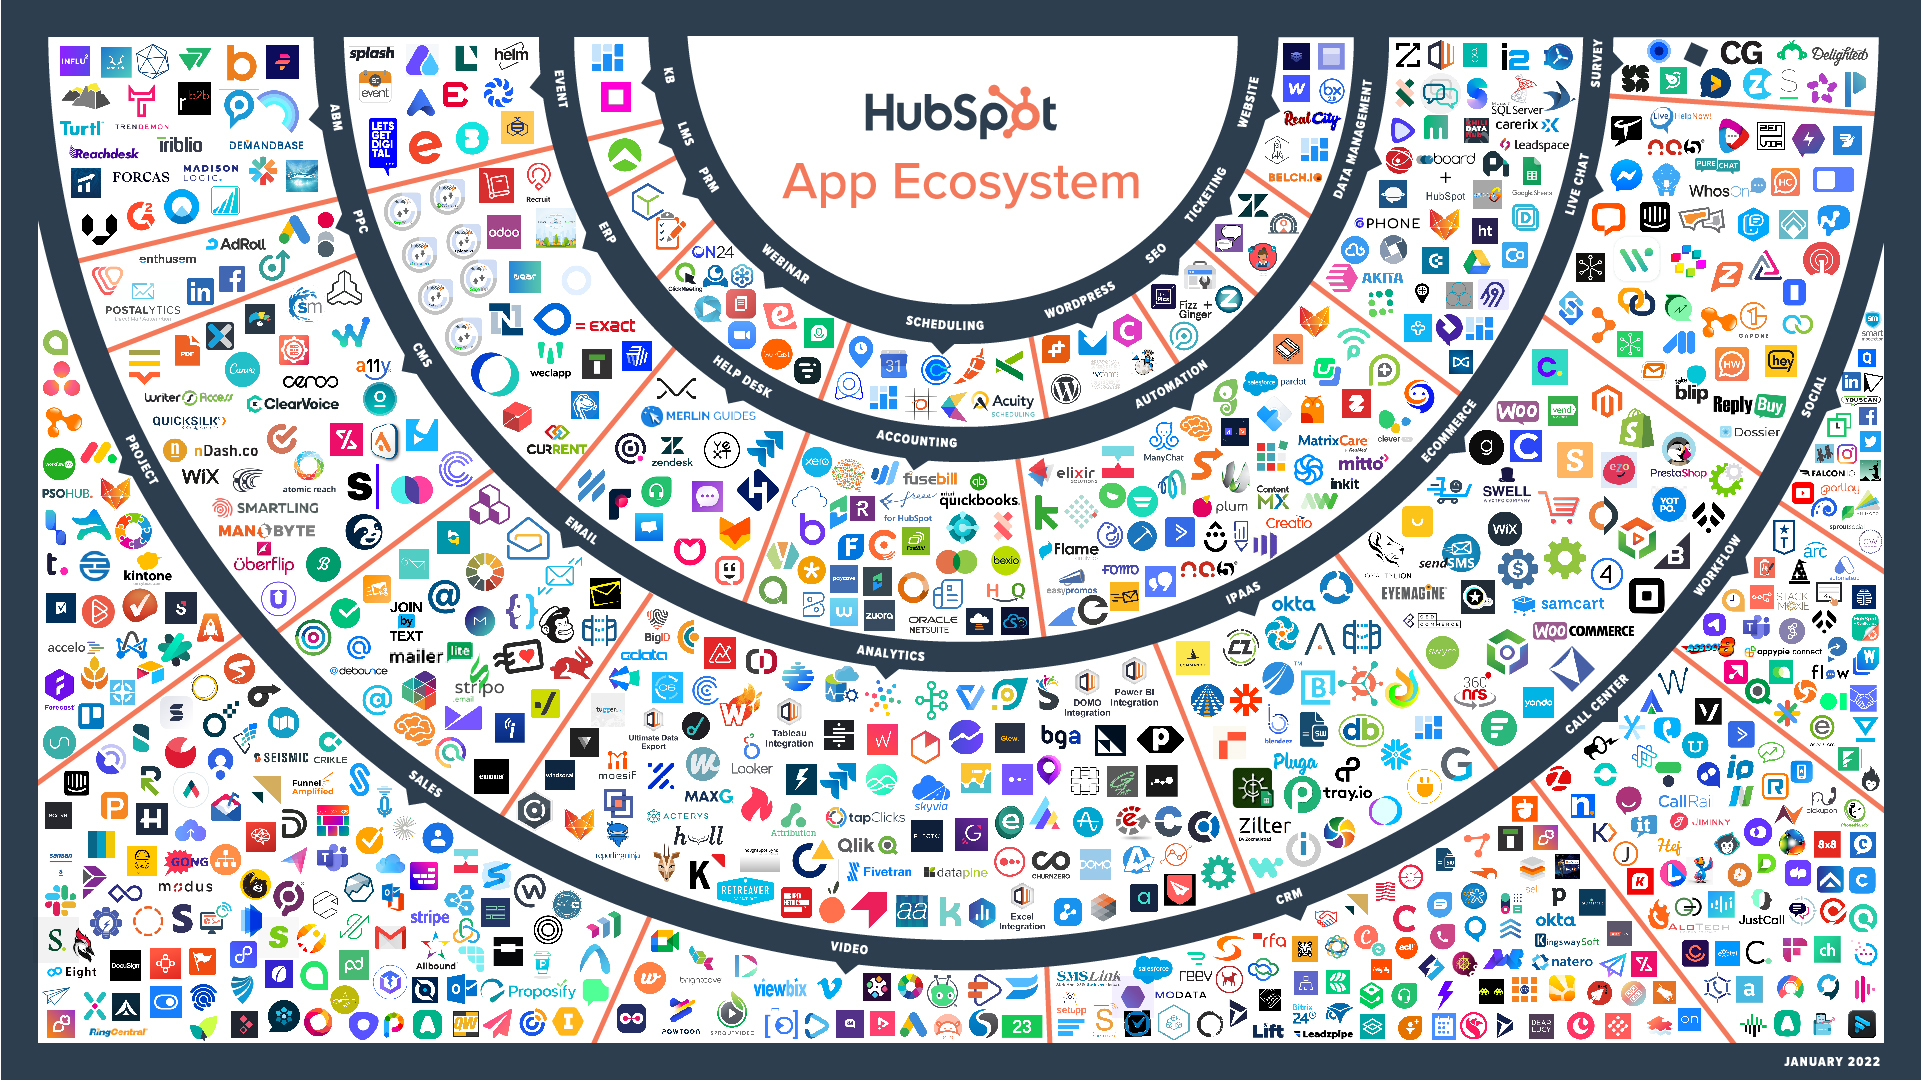 HubSpot’s App Ecosystem Surpasses 1,000 Integrations, Demonstrating Investments in Platform Growth